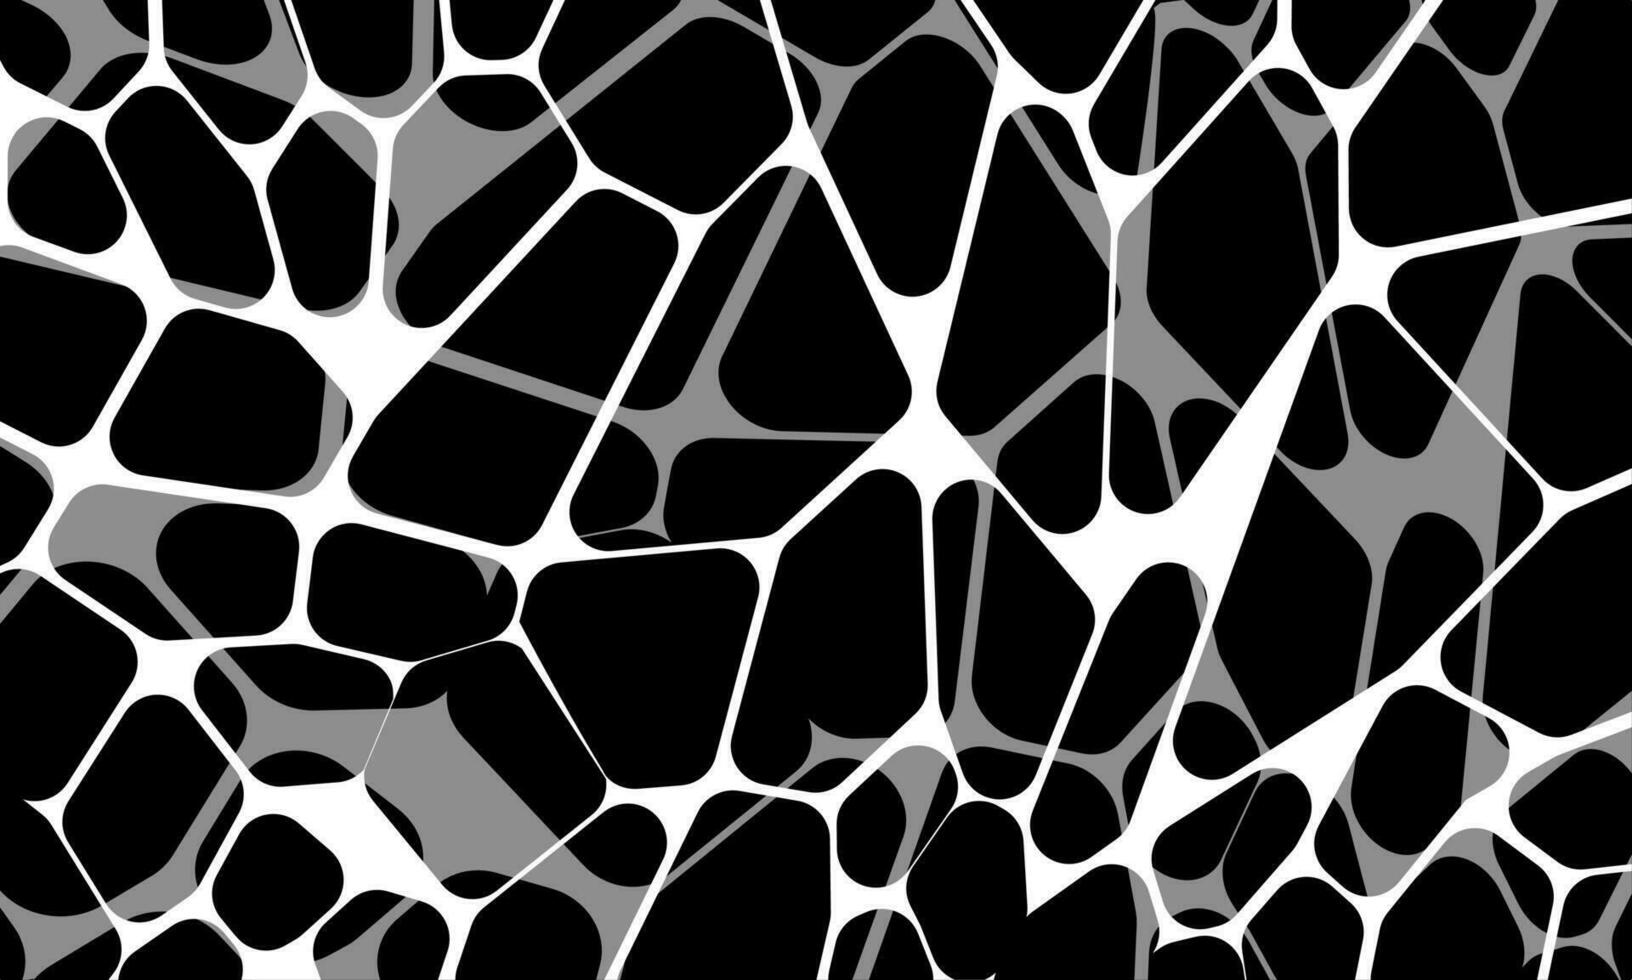 Voronoi geometric pattern.illustration stone effect arrangement pattern.element for decoration of your design backround. vector